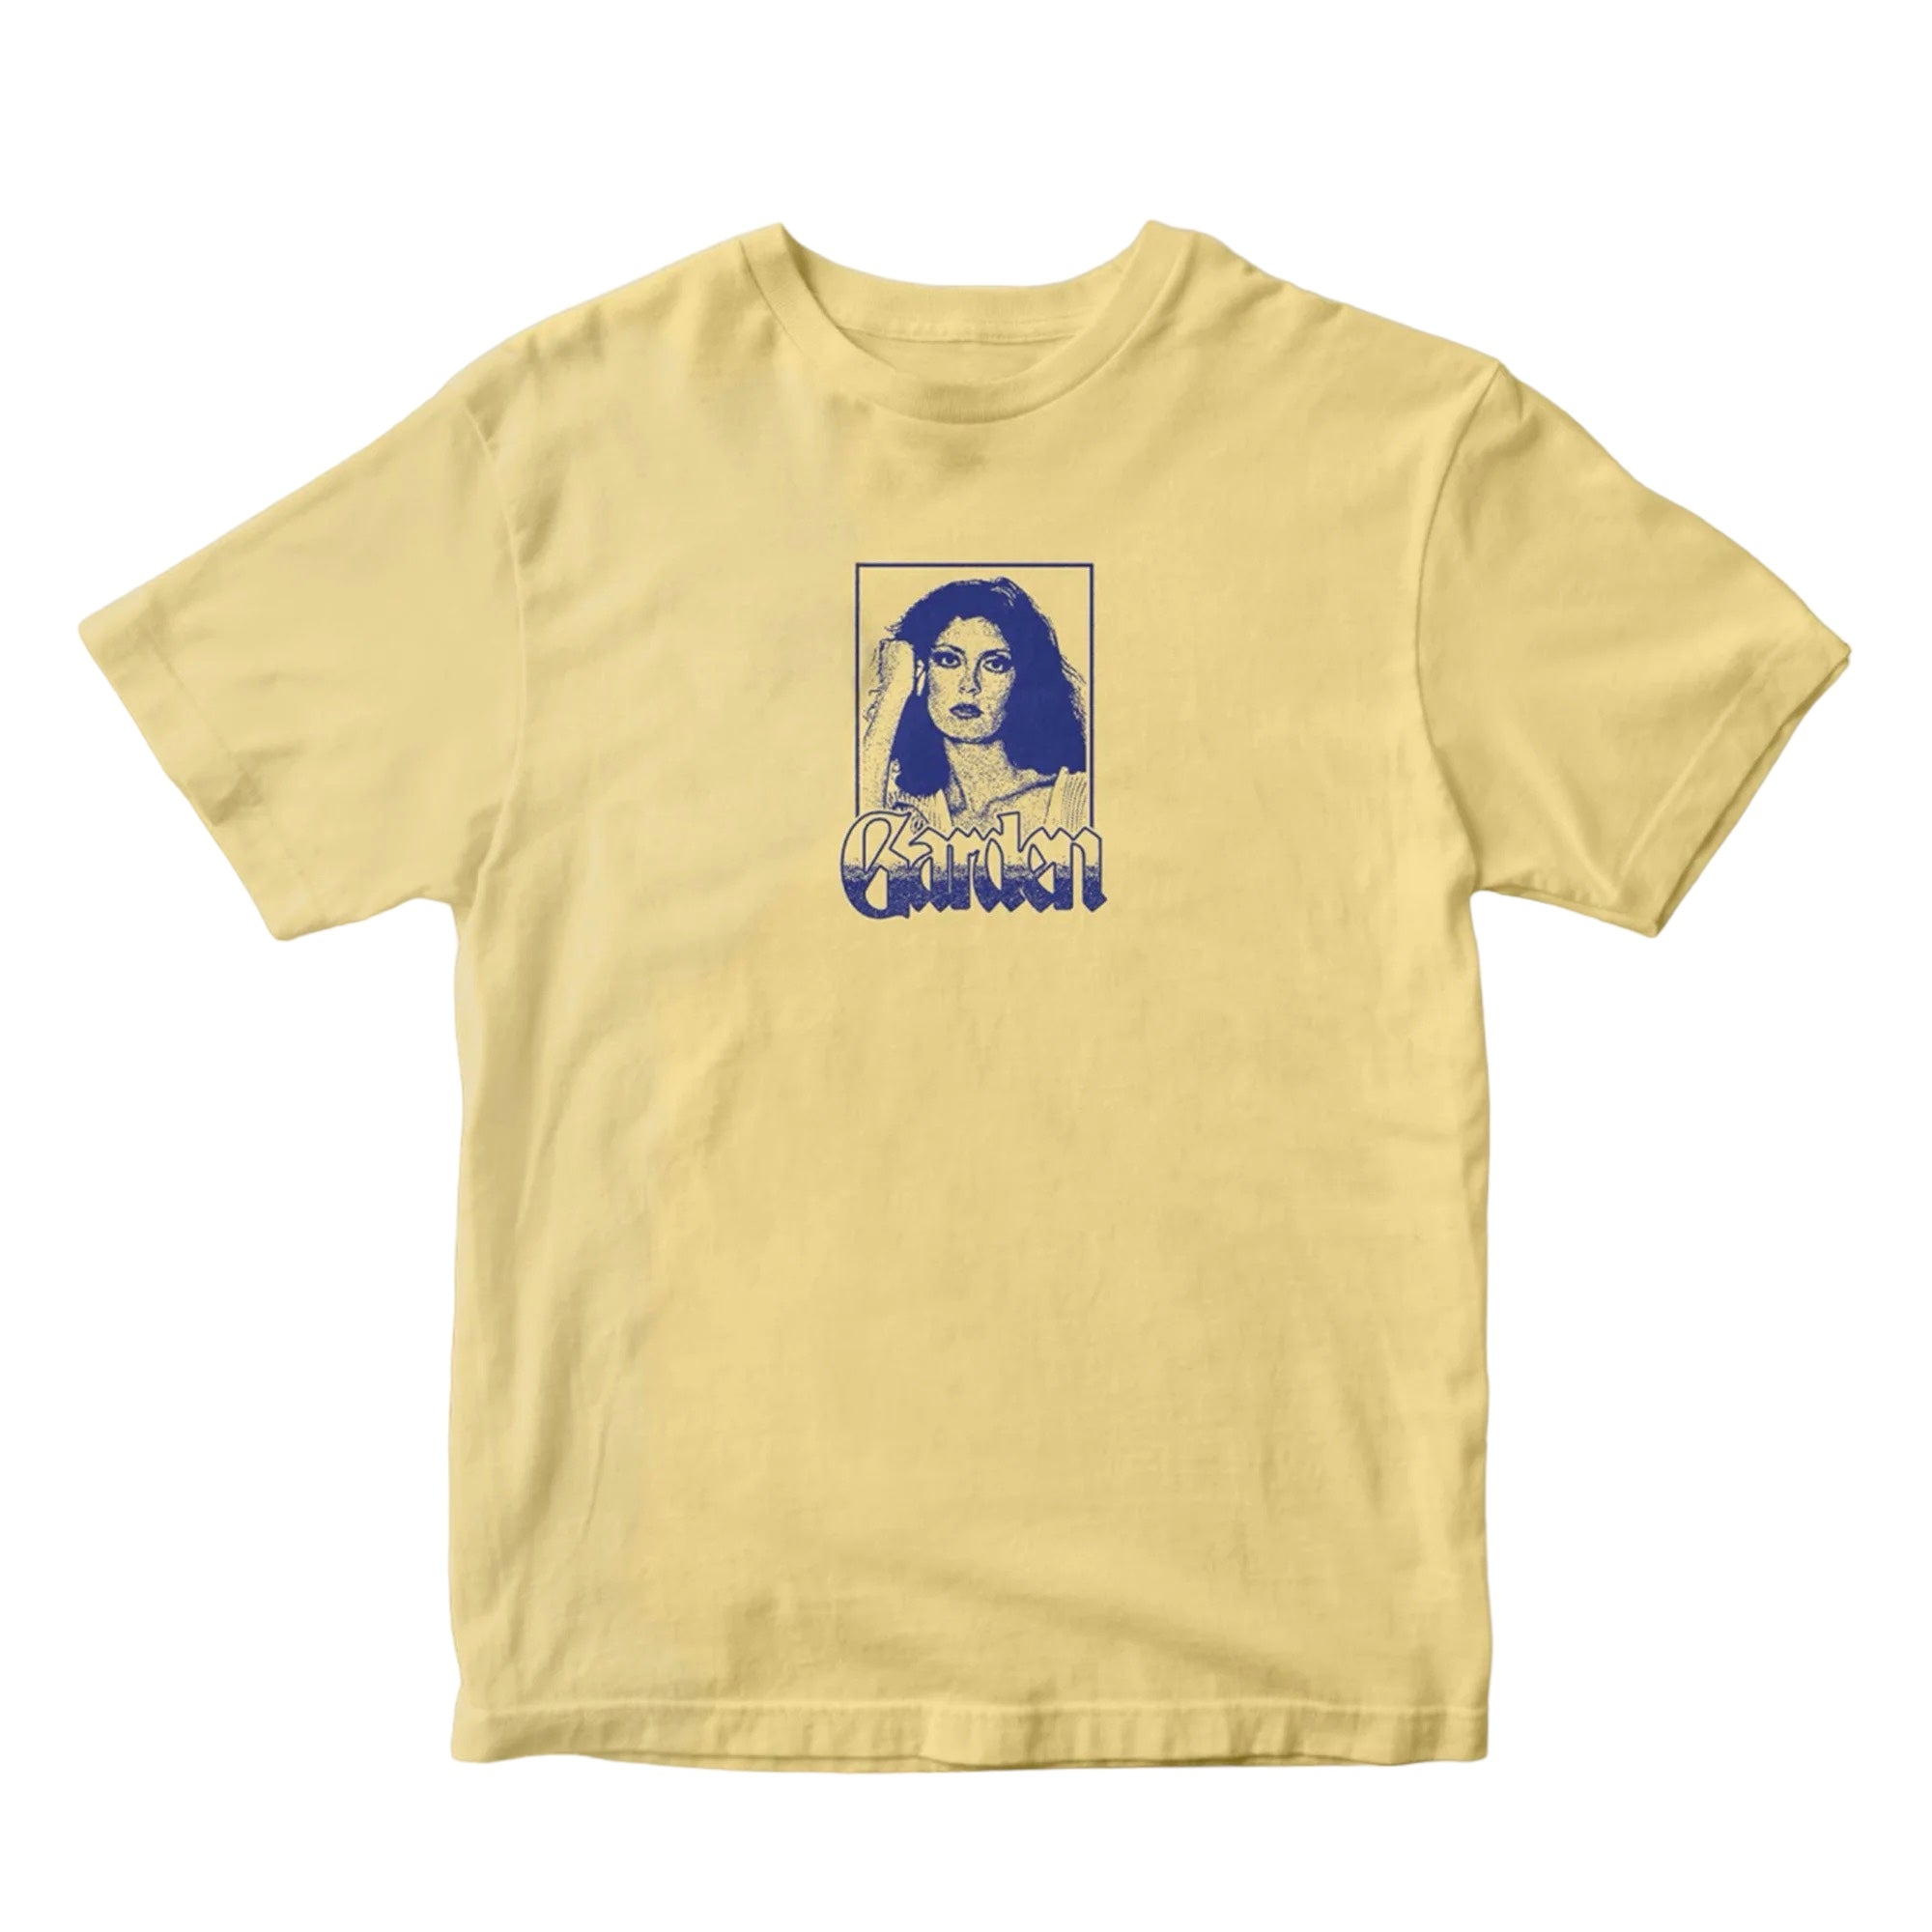 Garden & Louise T-shirt - Yellow